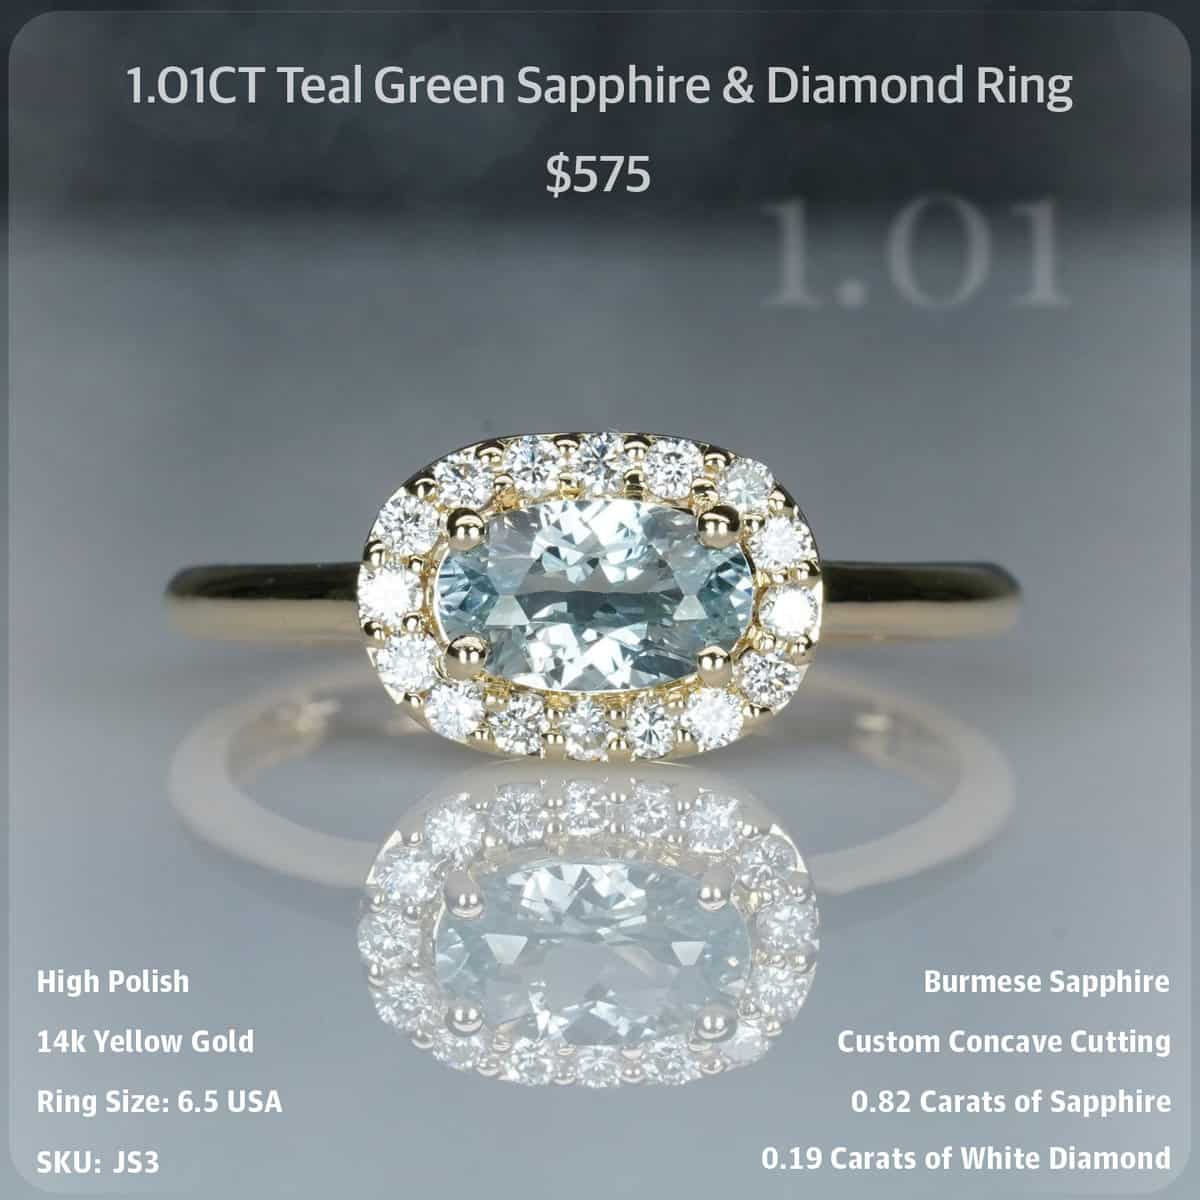 1.01CT Teal Green Sapphire & Diamond Ring